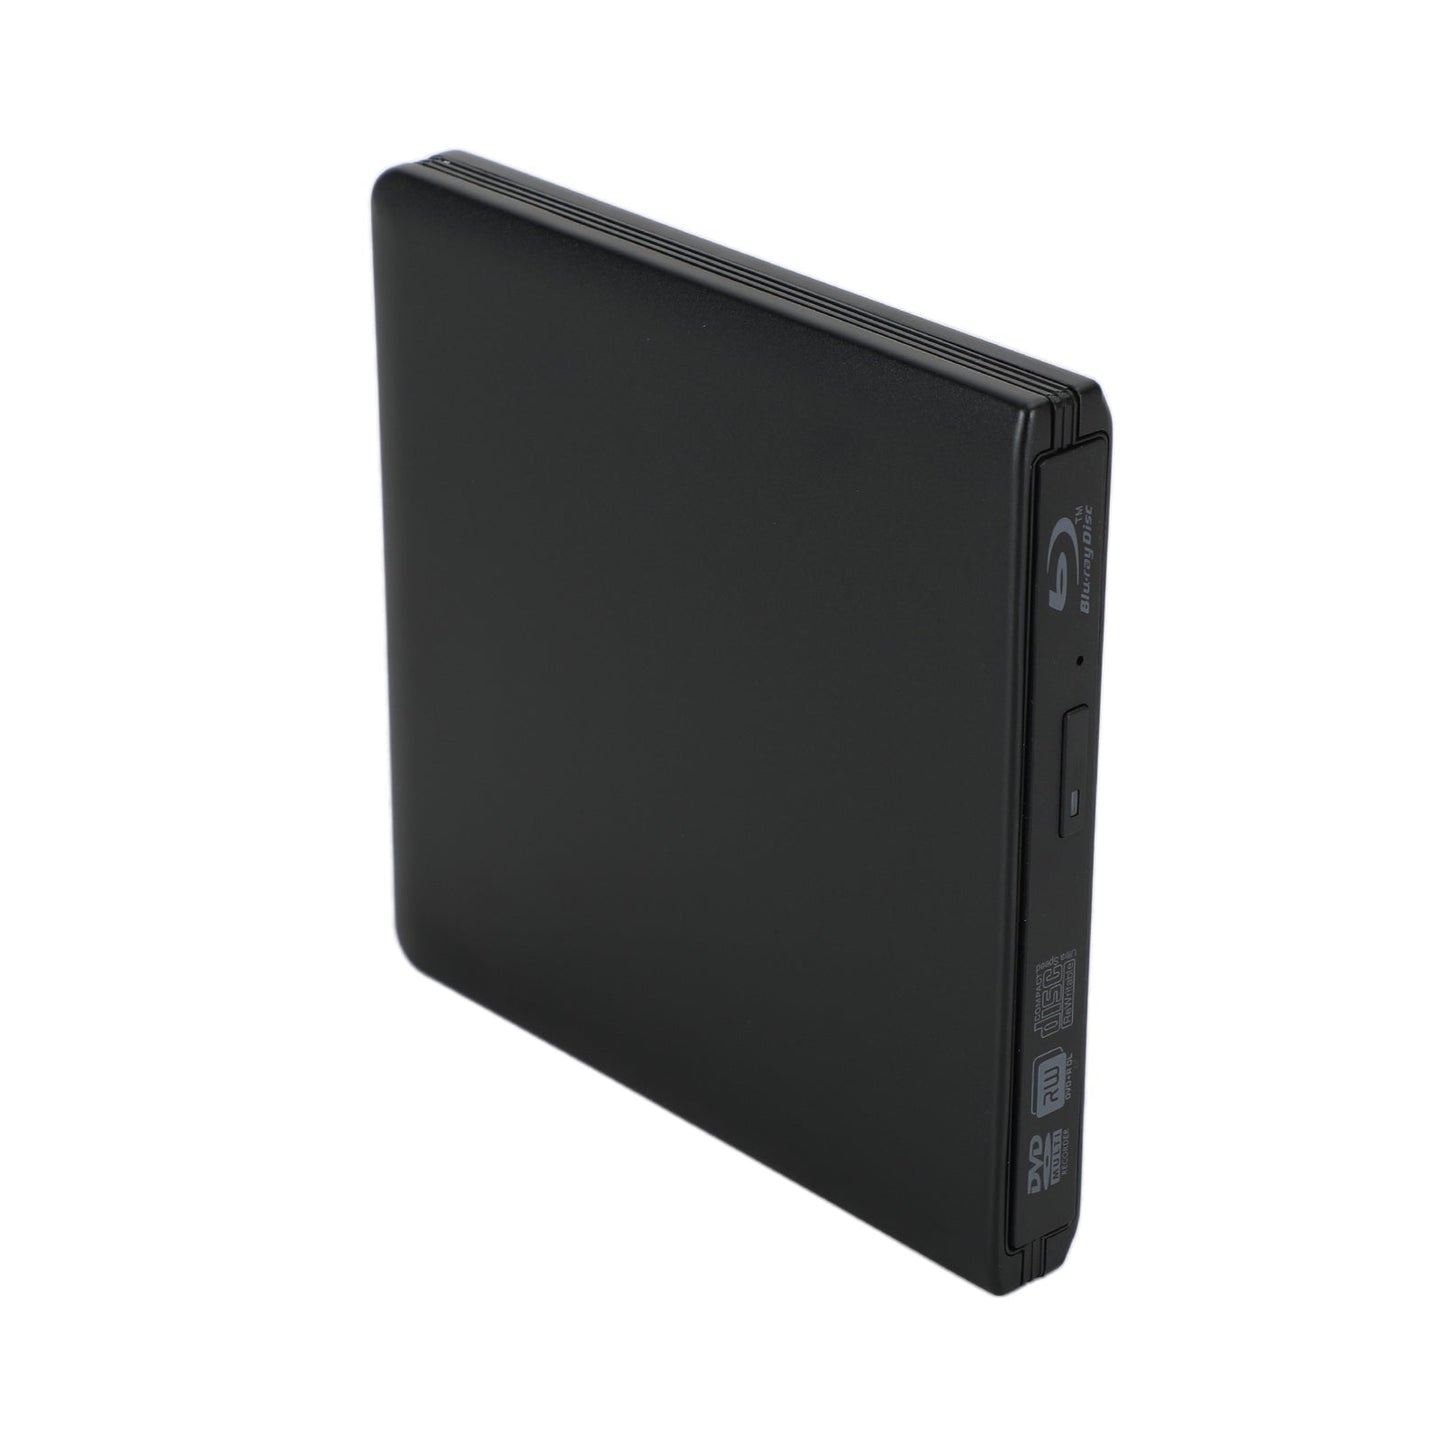 External Blu ray Drive BD Combo Player USB 3.0 Type-C for Win10 Mac OS Black